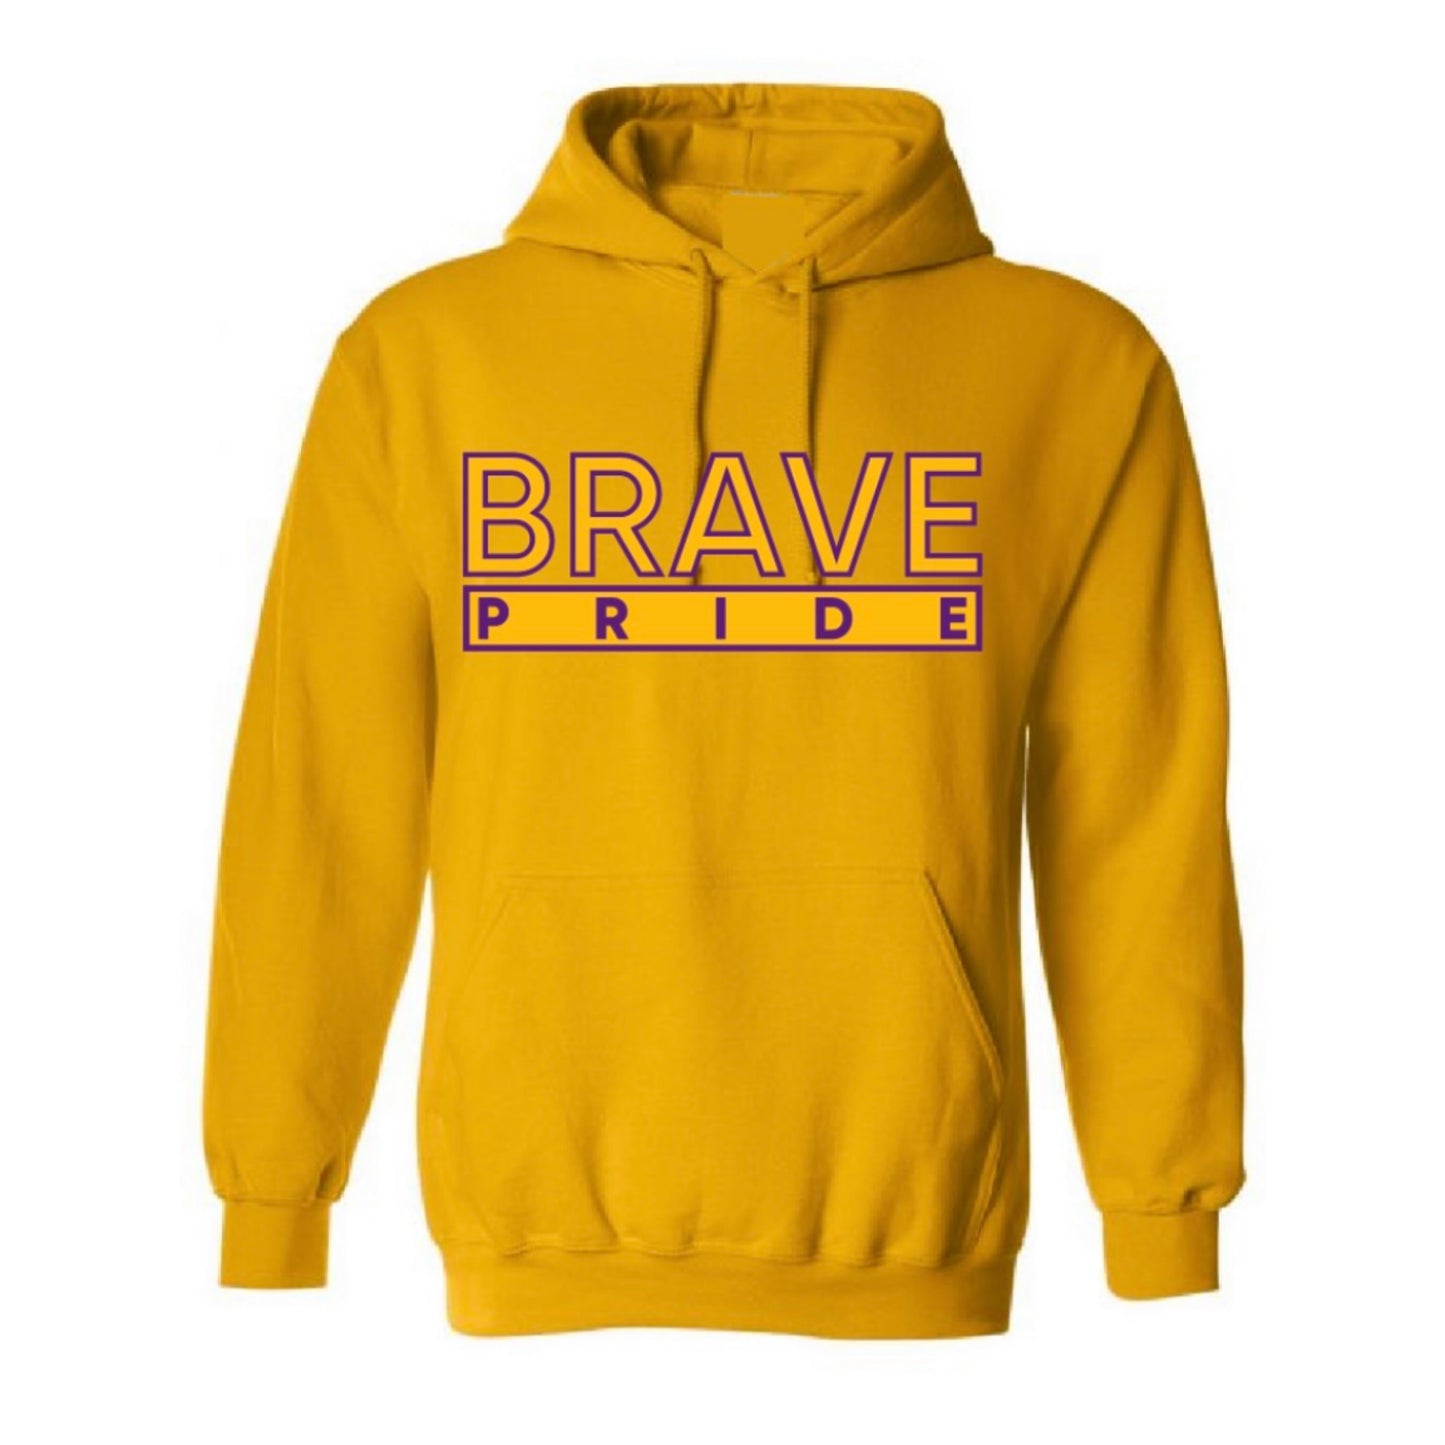 The “Brave Pride” Hoodie in Gold/Purple (MS)